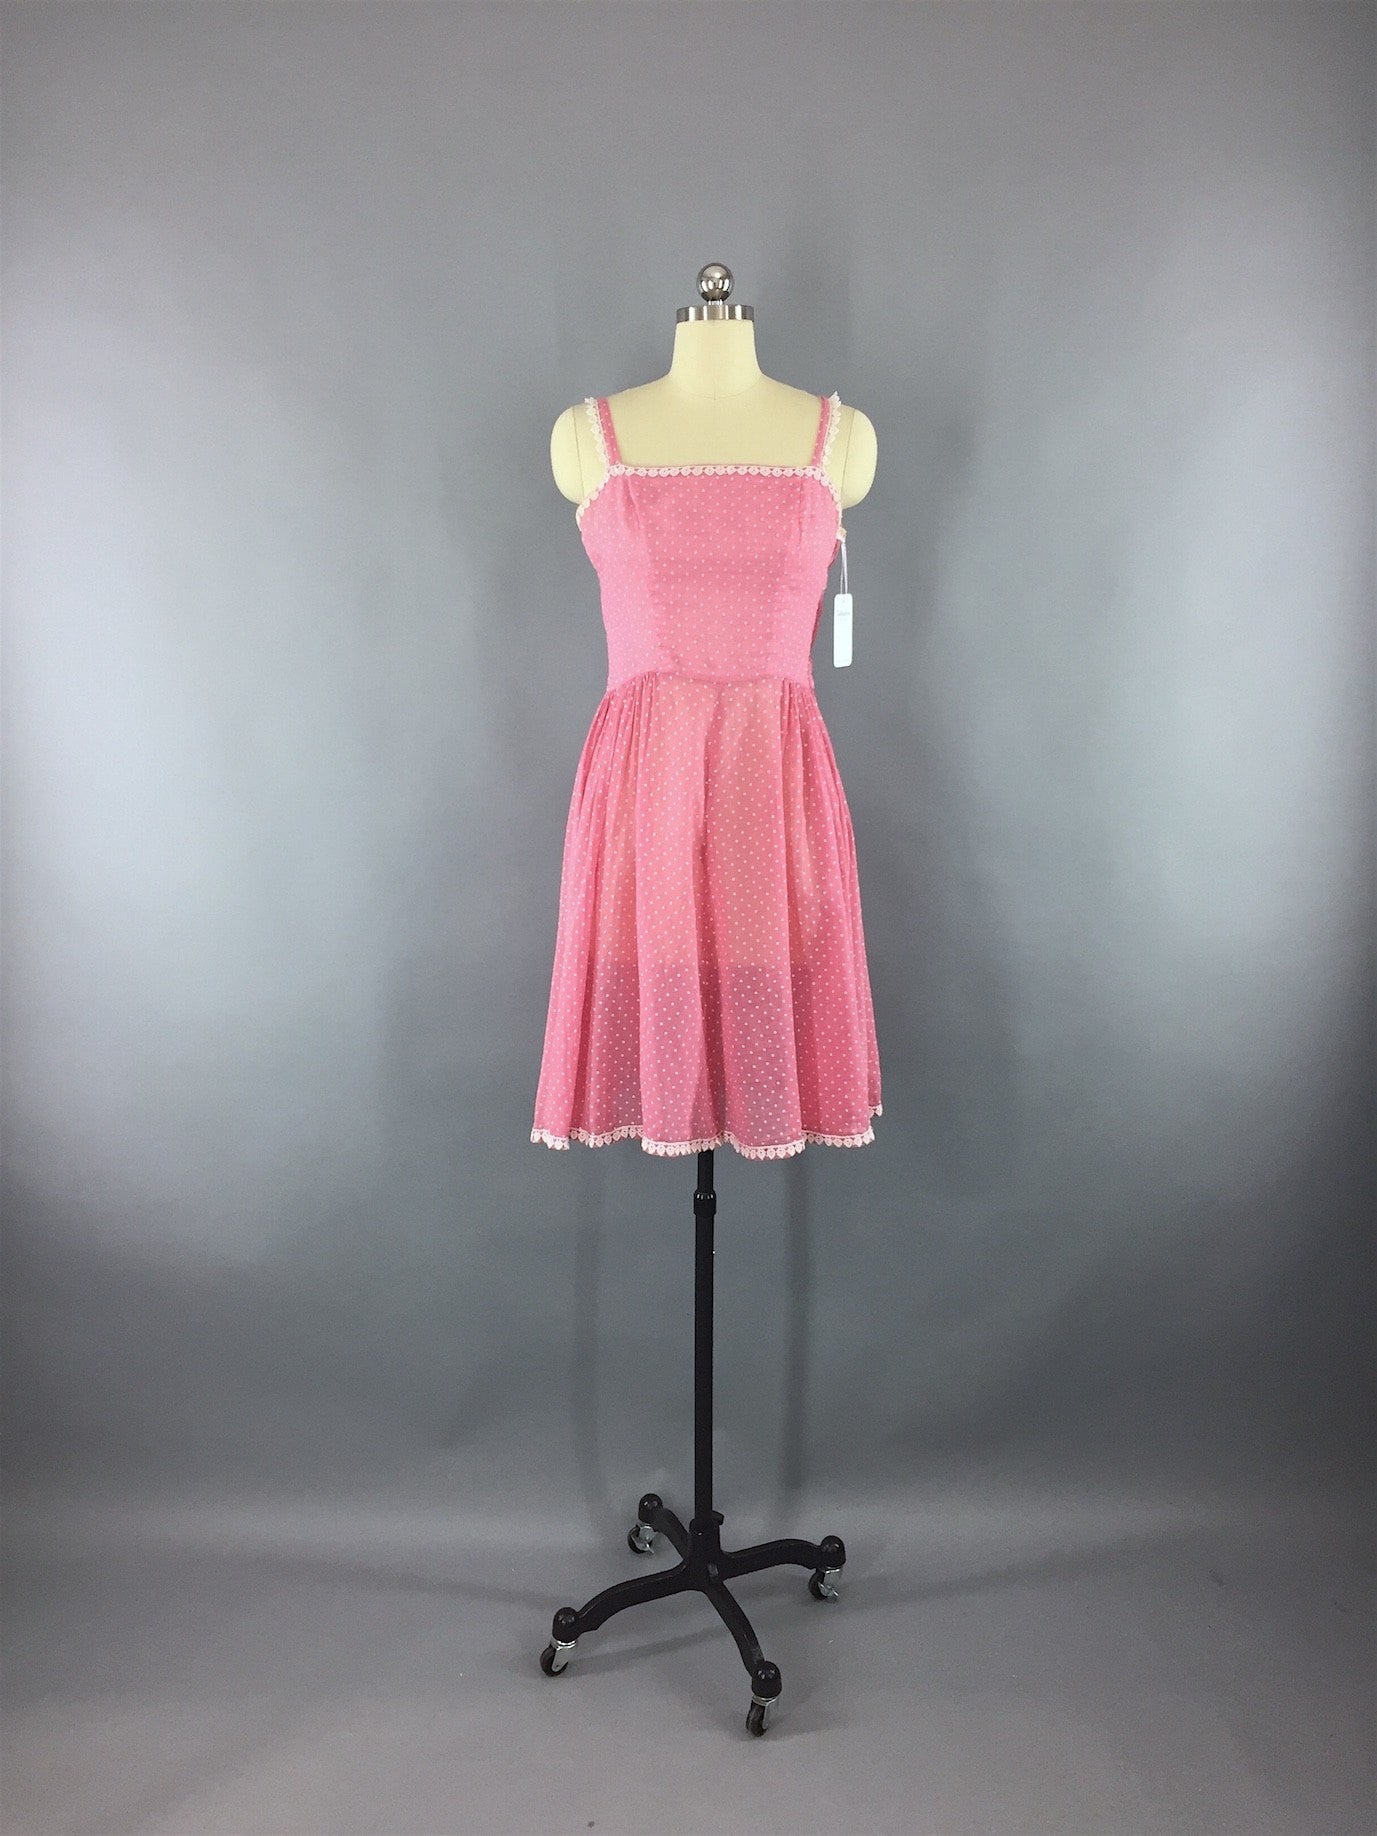 Vintage 1940s-50s Pink Swiss Dot Dress - ThisBlueBird